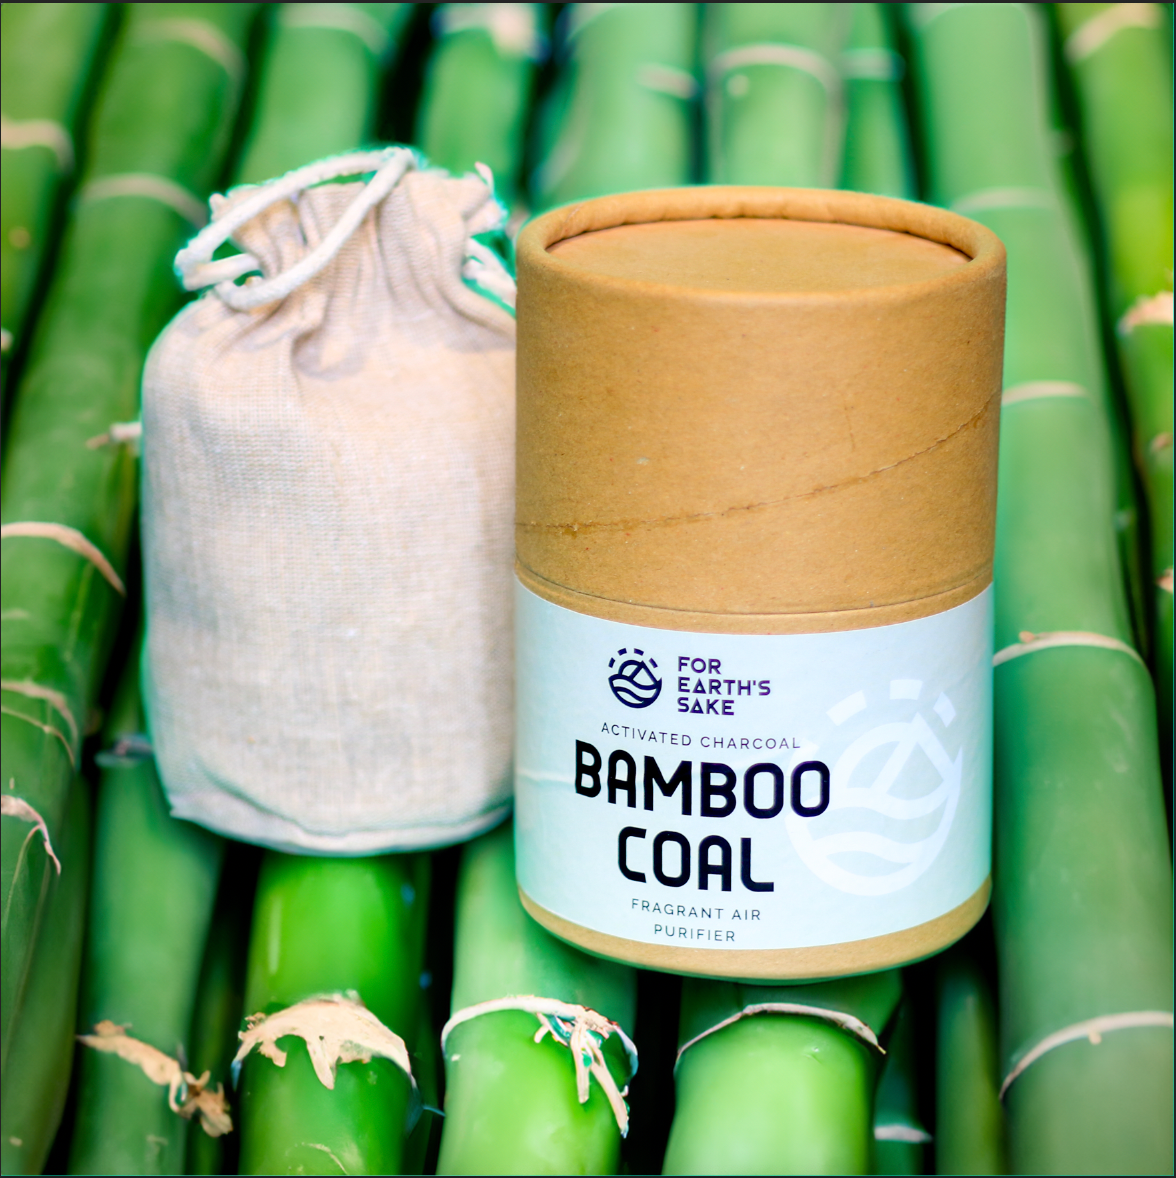 Bamboo Coal Air Purifier